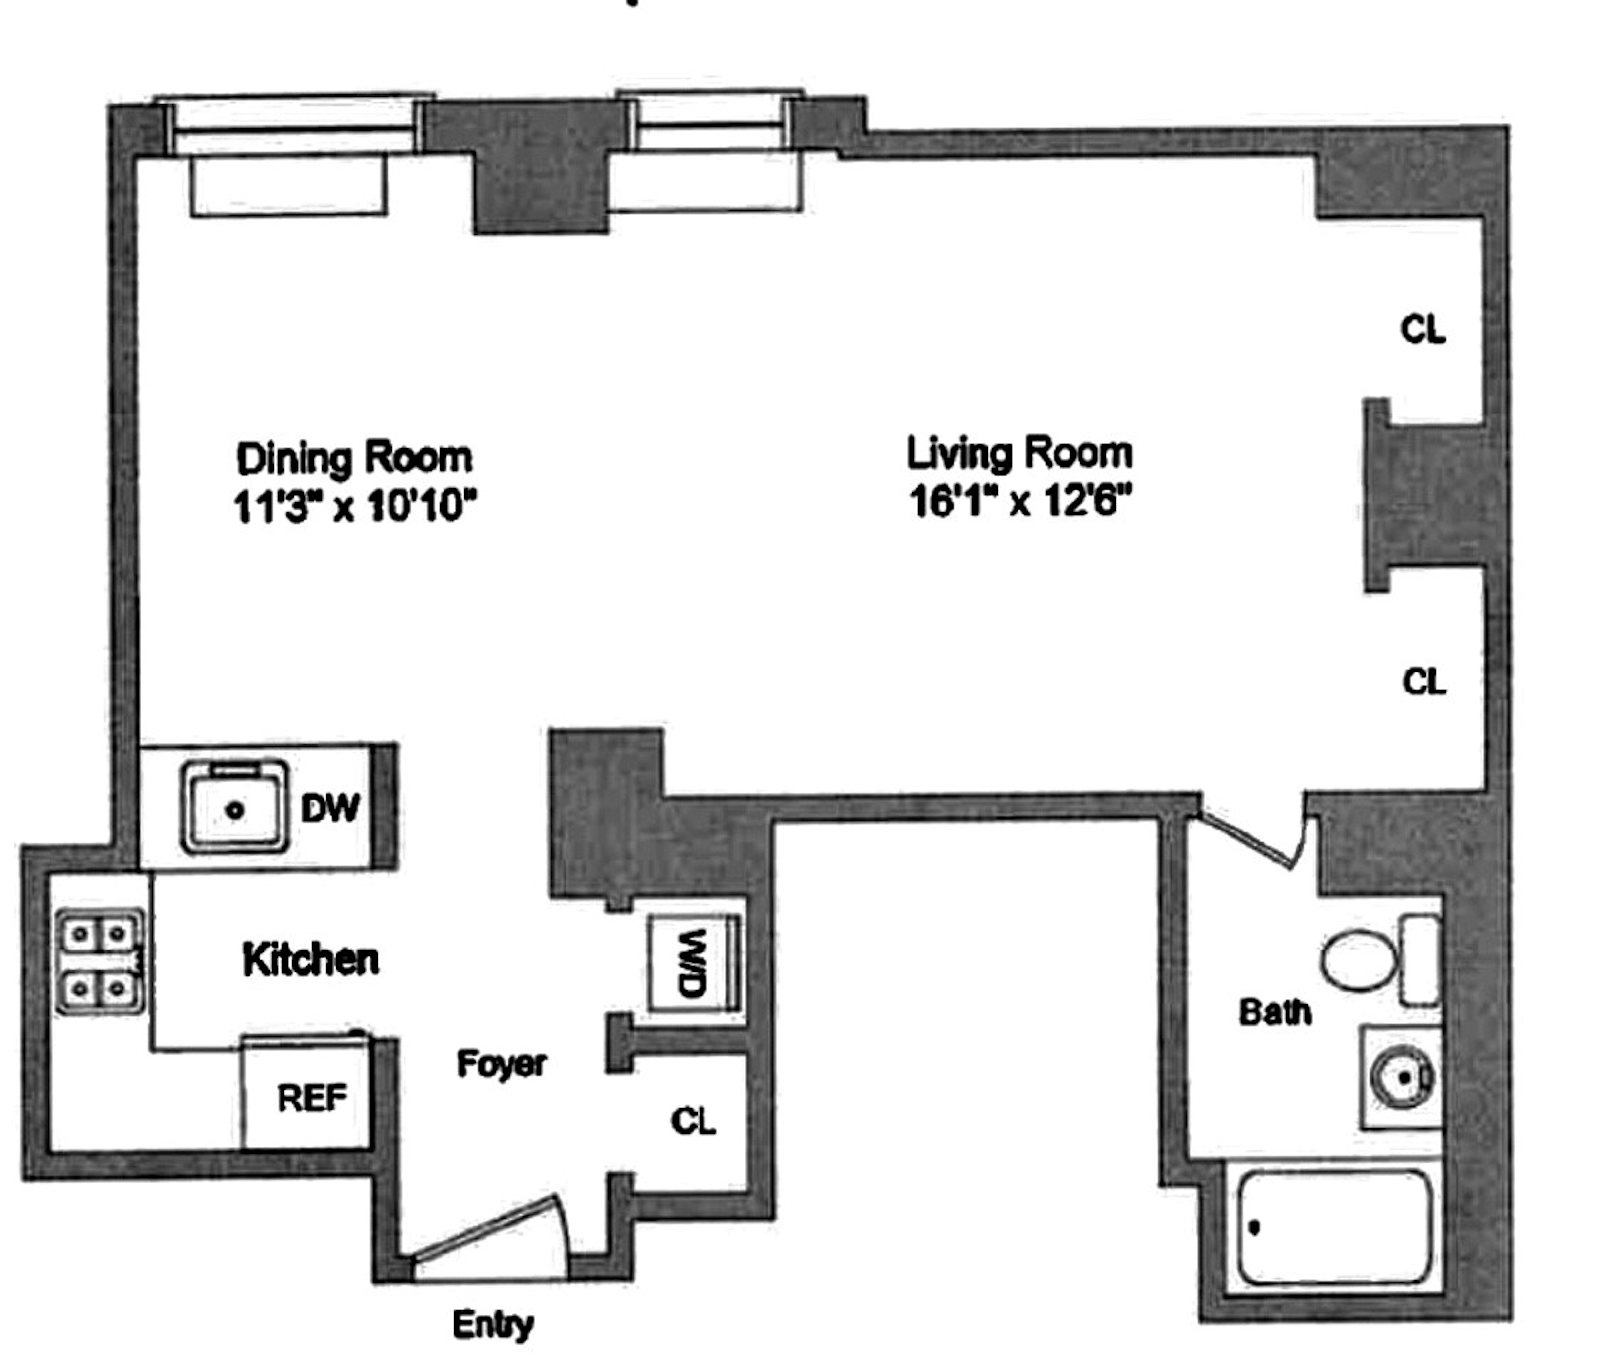 Floorplan for 100 West 58th Street, 5A